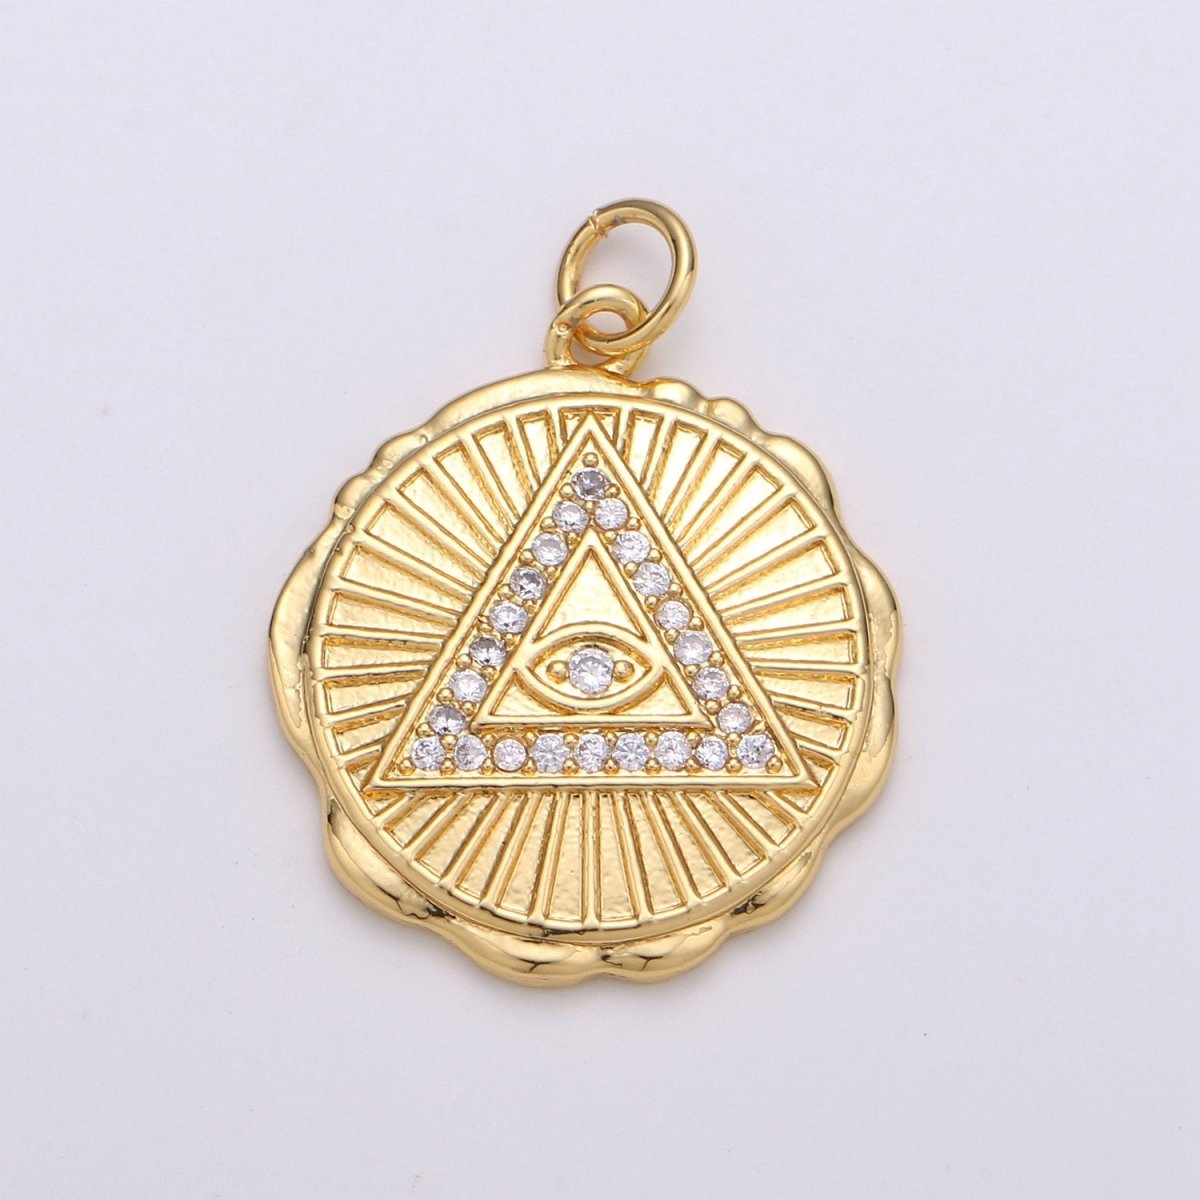 Small Gold Eye of Providence Symbol Pendant All Seeing Eye Charm Illuminati Emblem Third Eye Amulet Talisman Sign Medallion Charm D-346 - DLUXCA